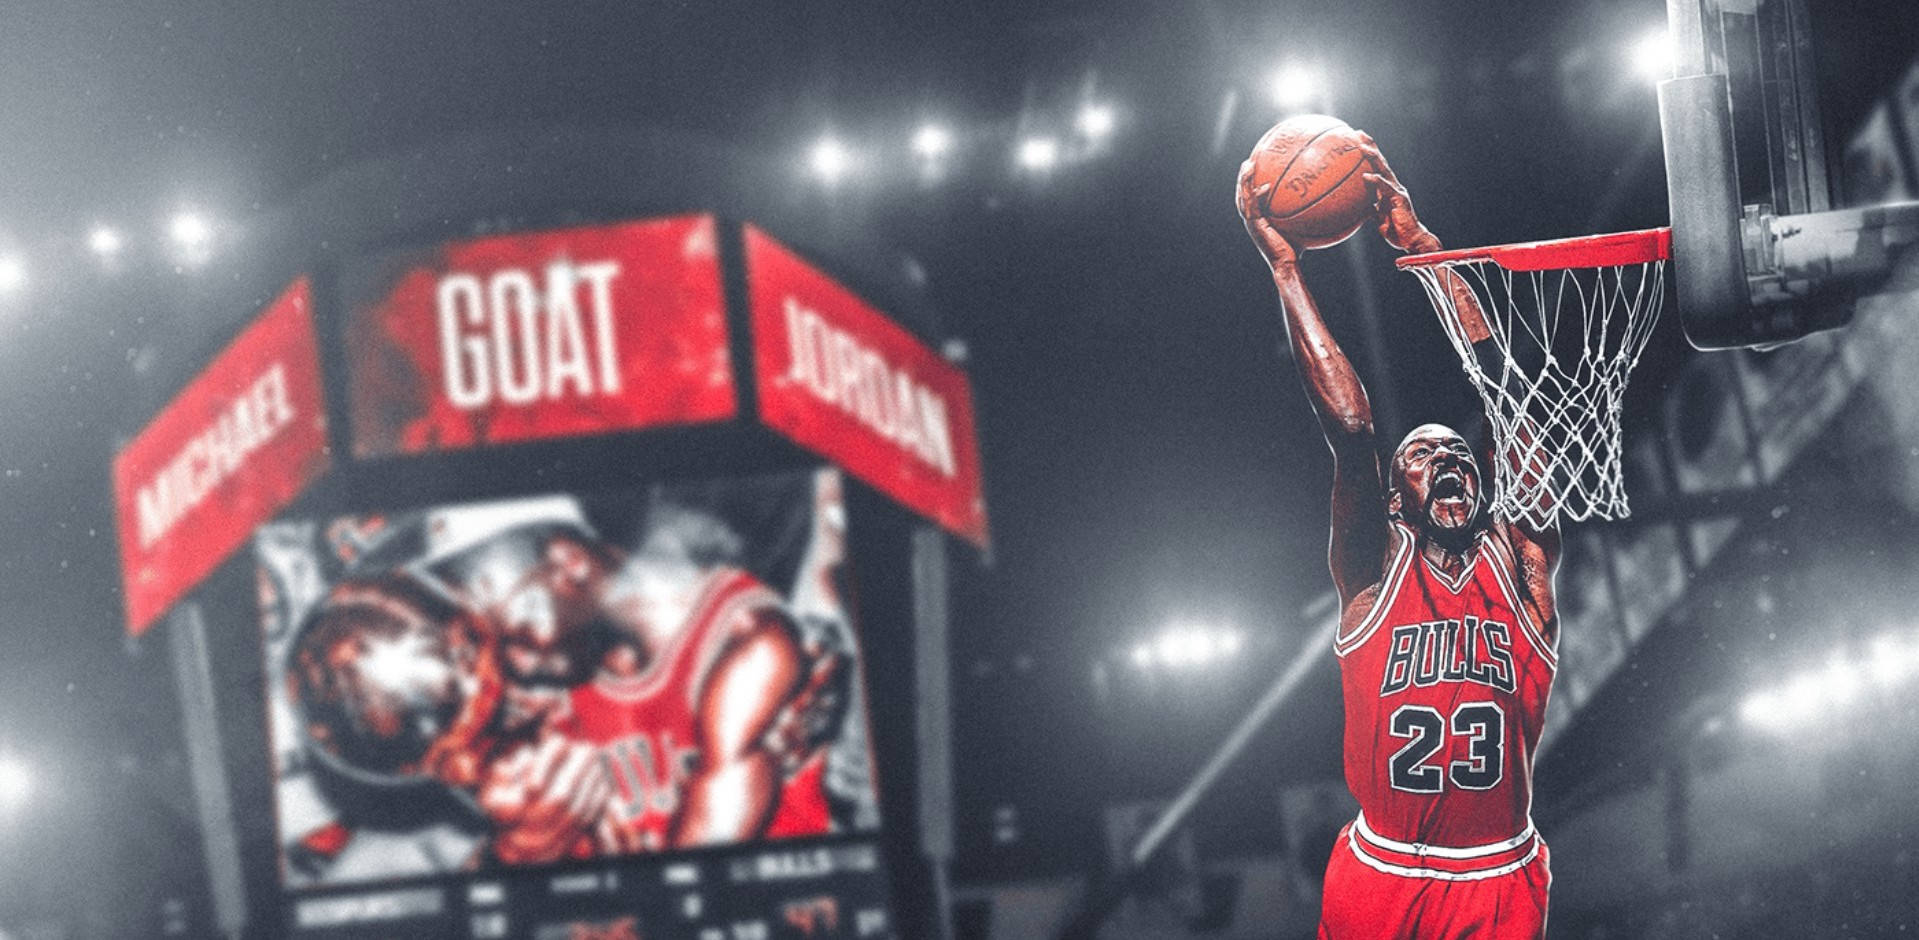 Cool Michael Jordan Basketball Moment